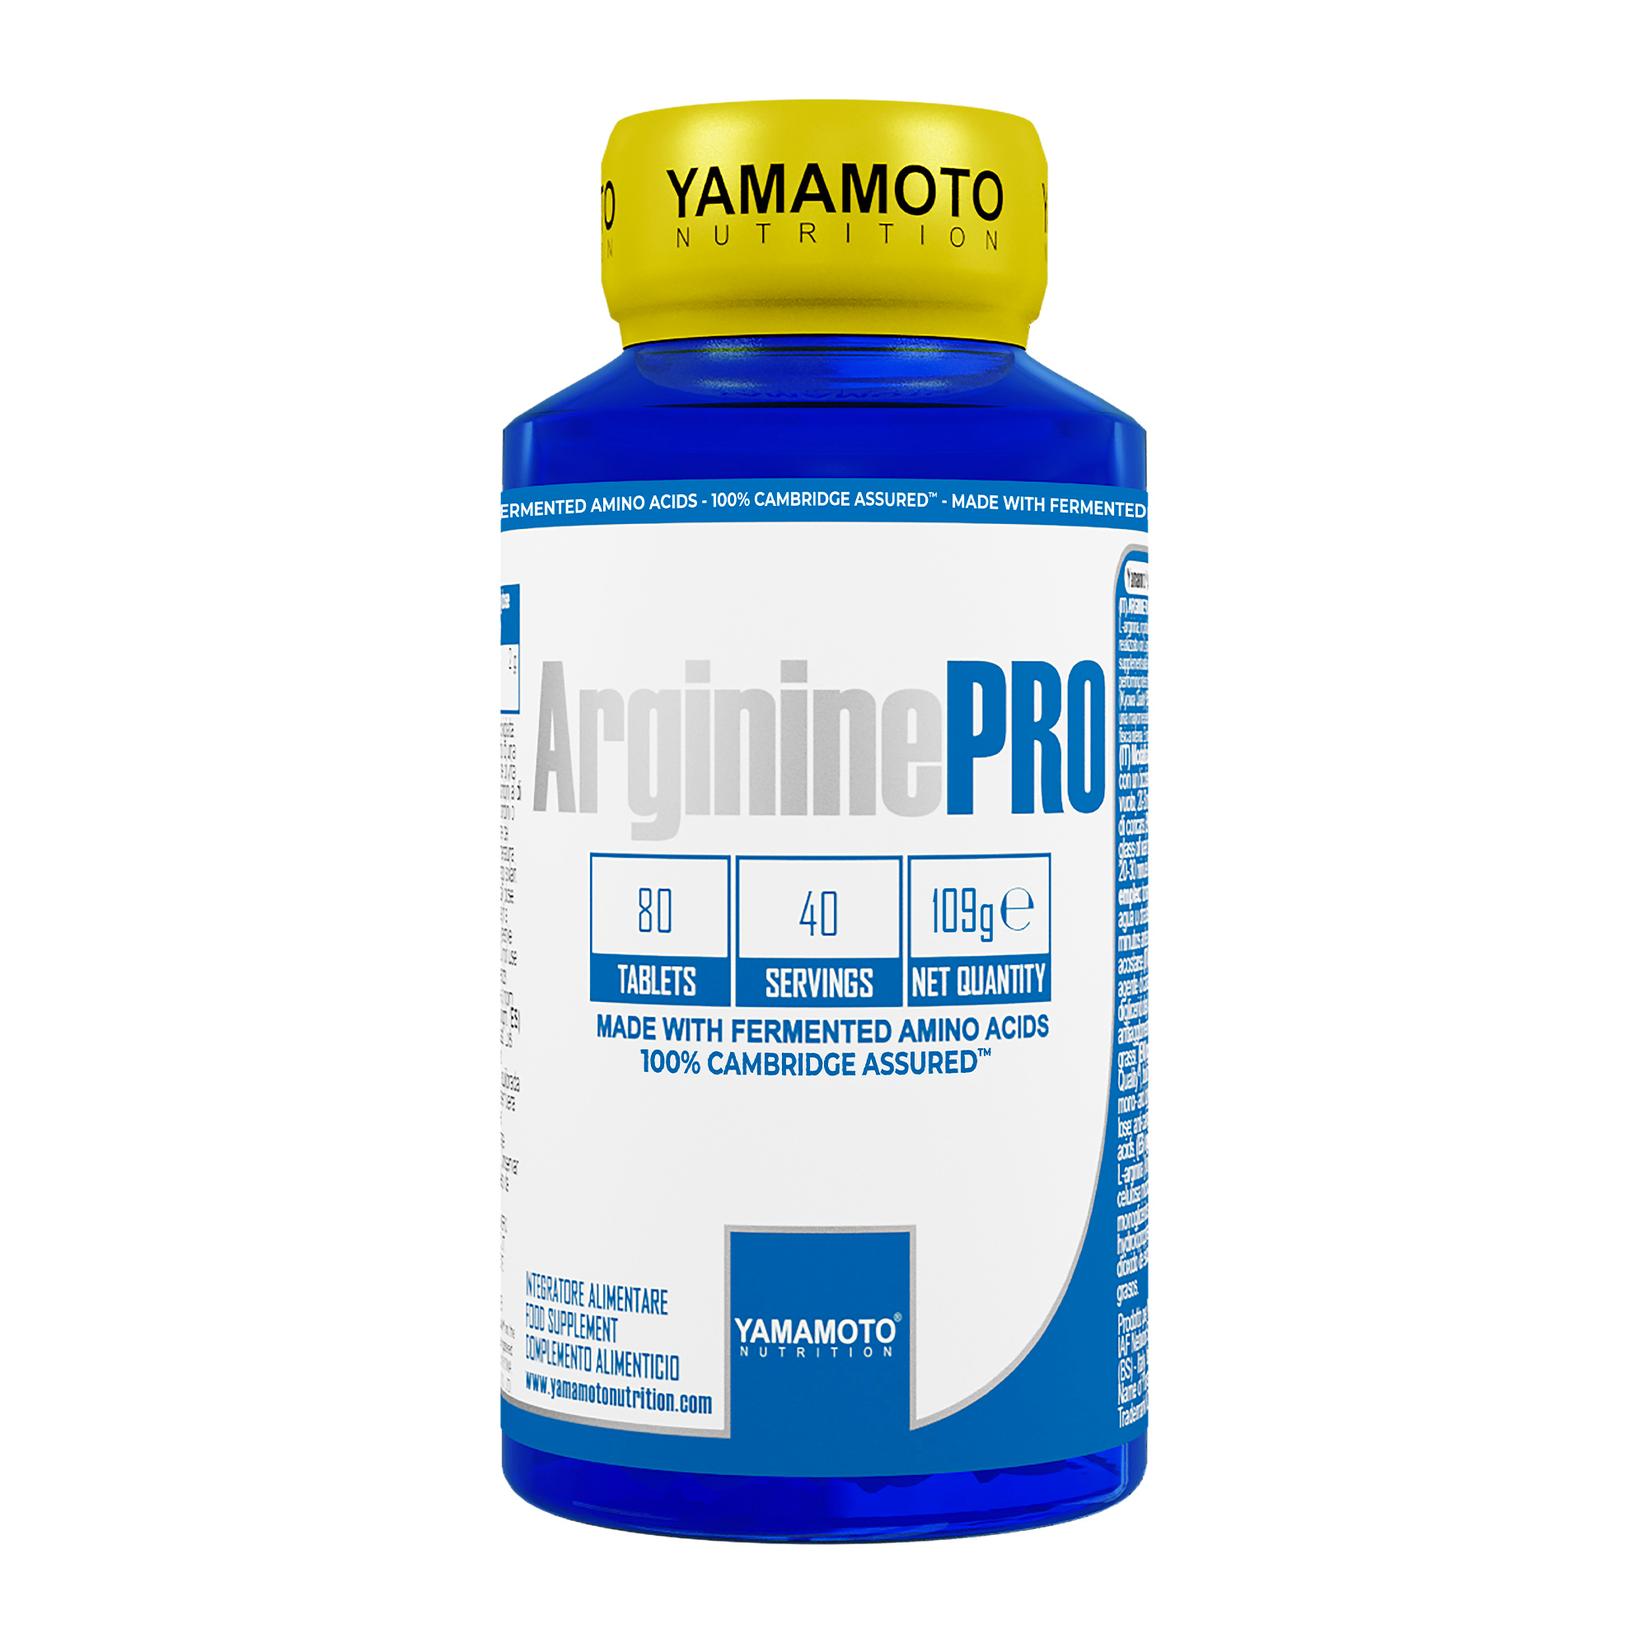 YAMAMOTO Pre-Workout Arginine PRO Cambridge Assured™ 80 Caplets